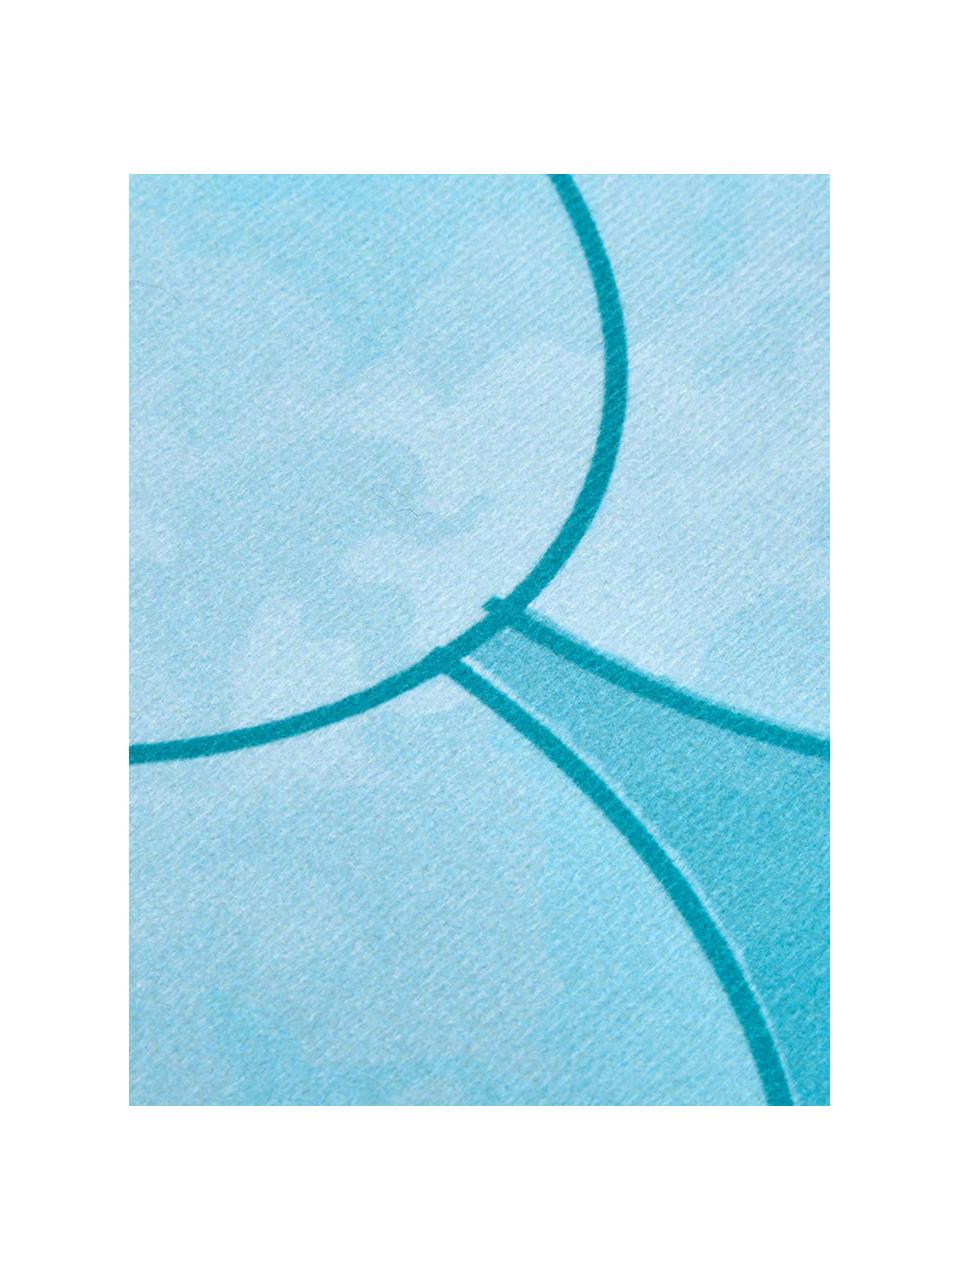 Toalla de playa Mermaid, 55% poliéster, 45% algodón
Gramaje ligero 340 g/m², Azul claro, turquesa, blanco, An 87 x L 180 cm